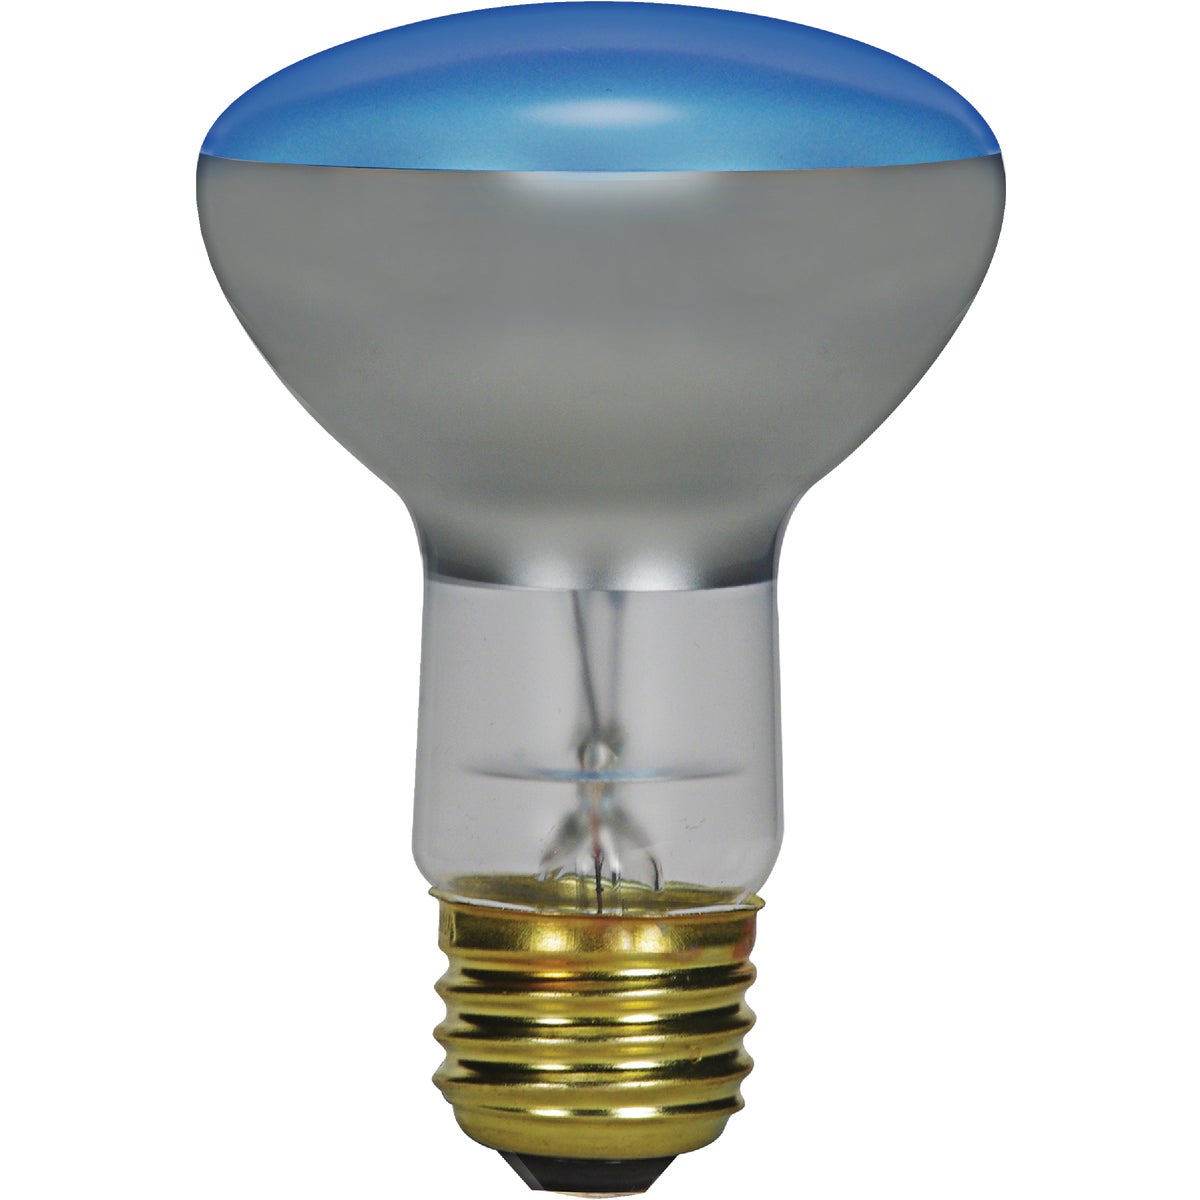 Item 516481, R25 incandescent plant light bulb with medium brass base.